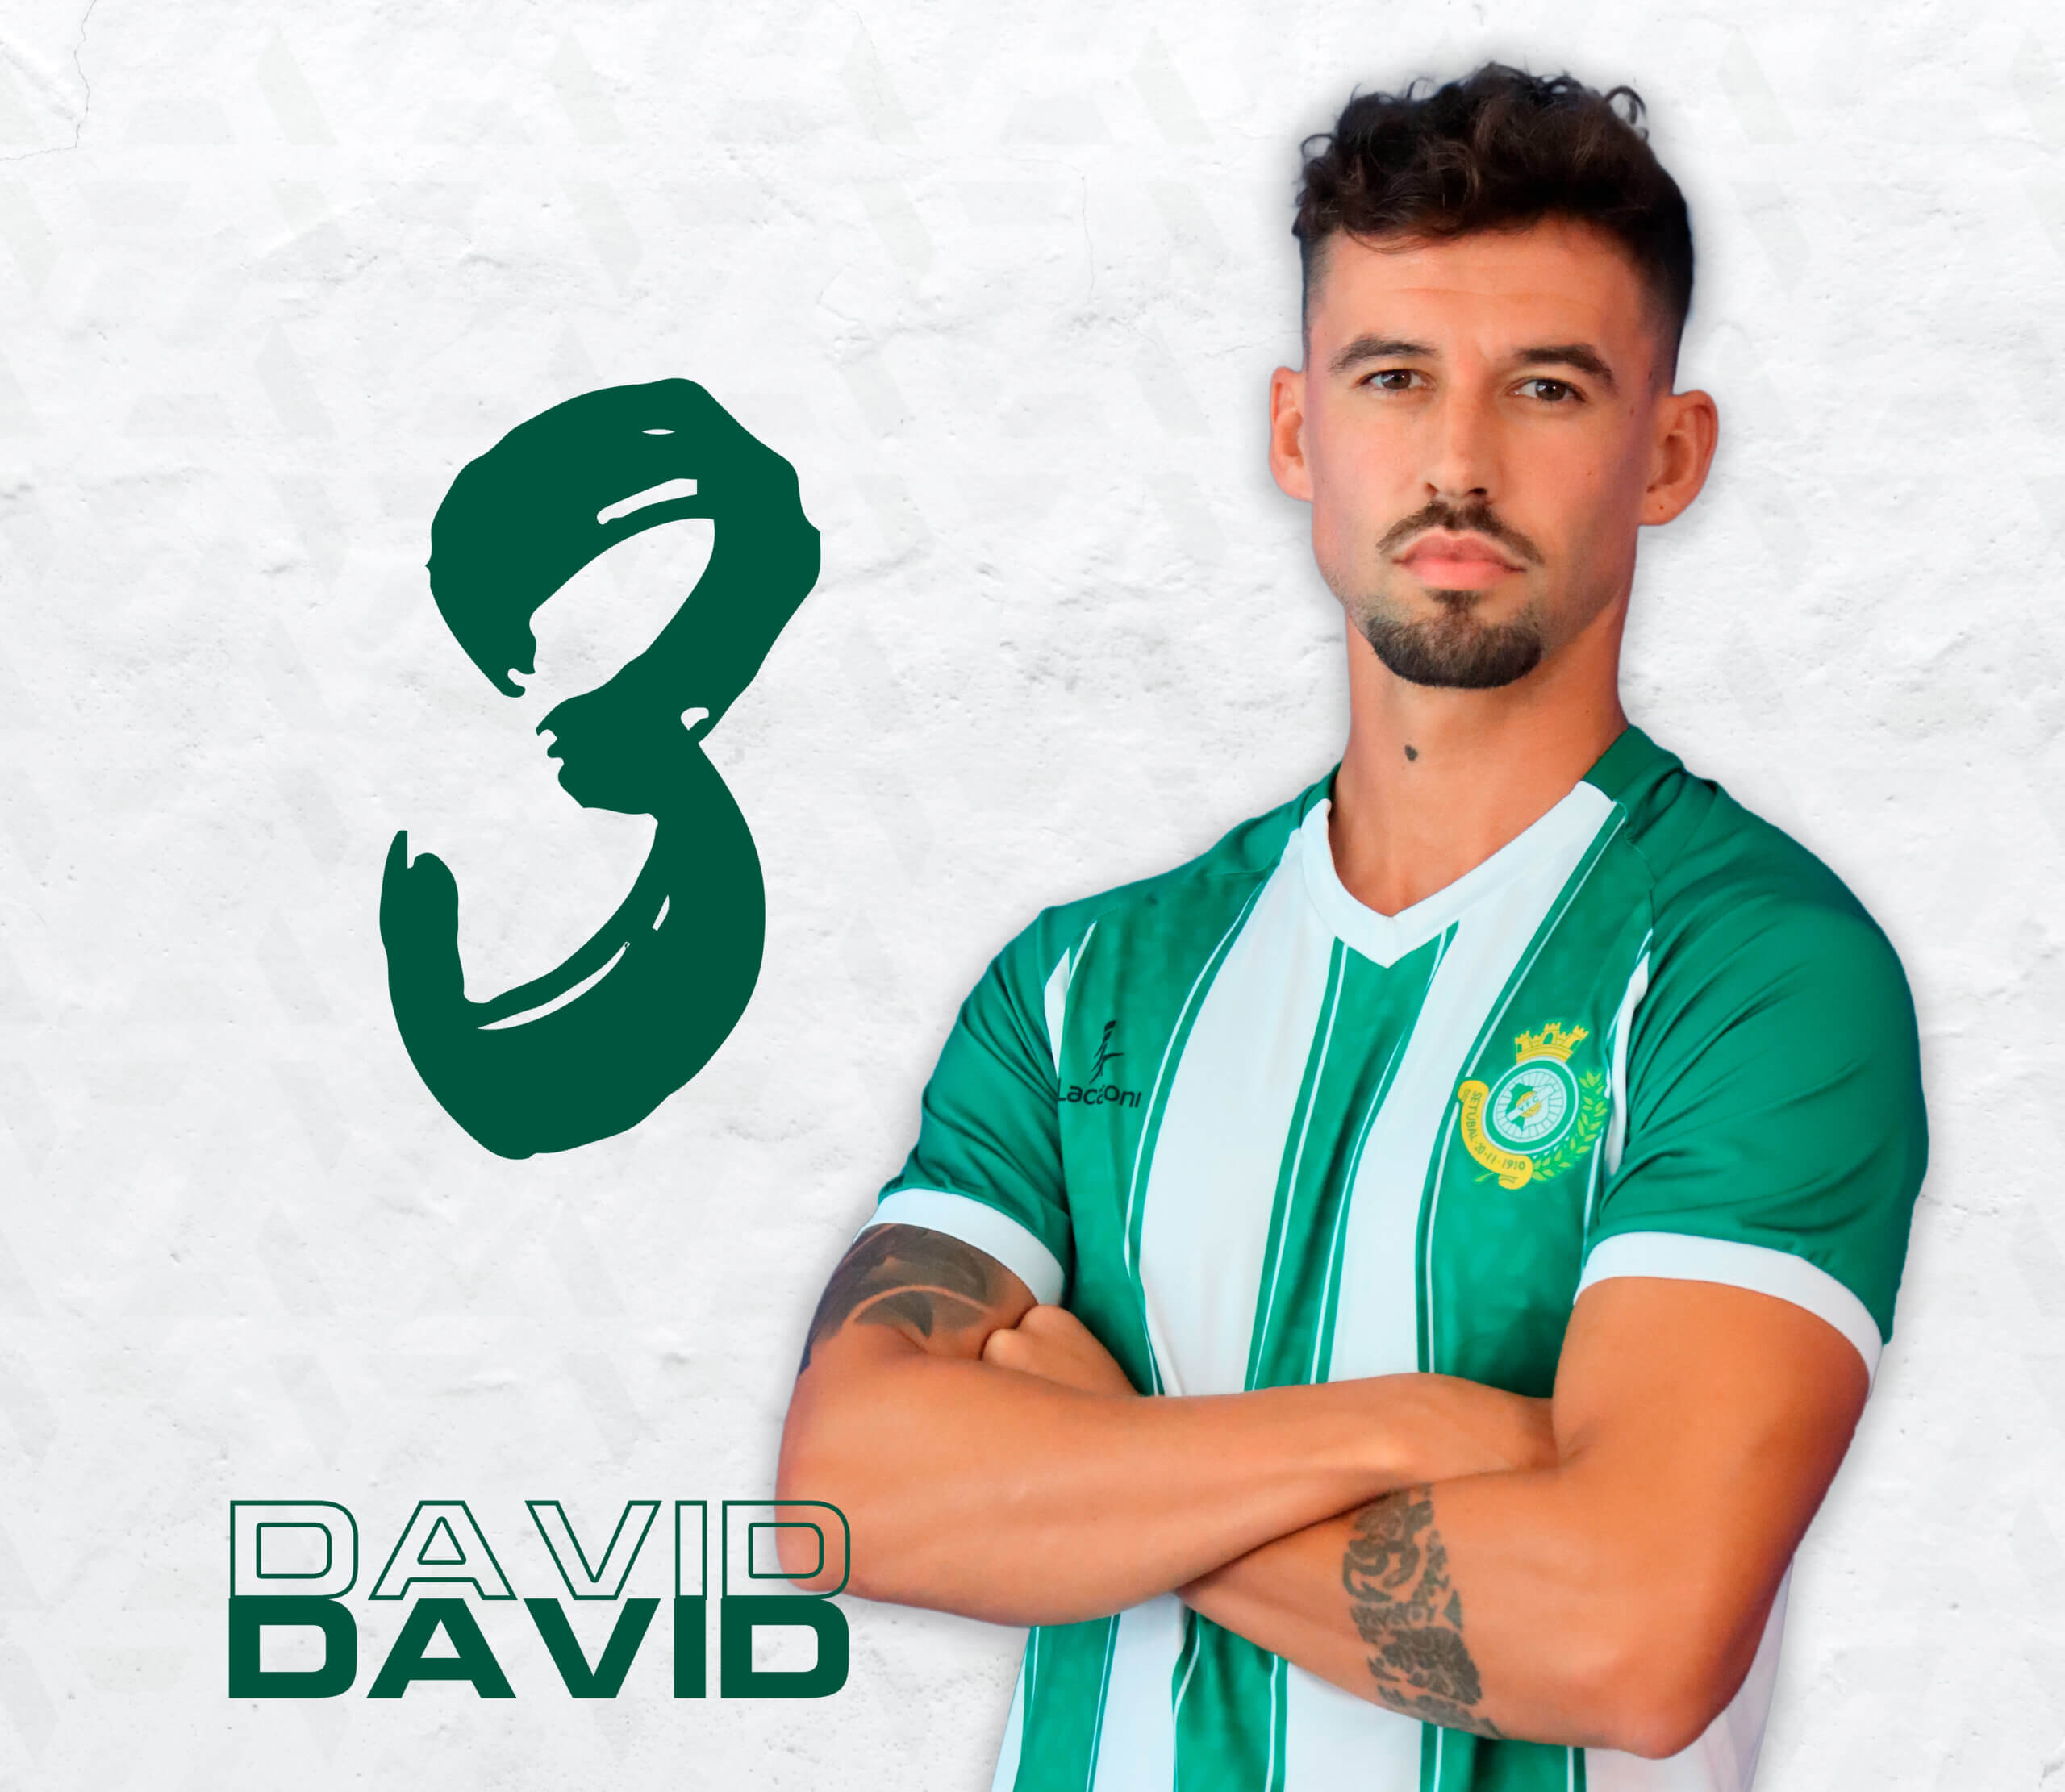 David Santos